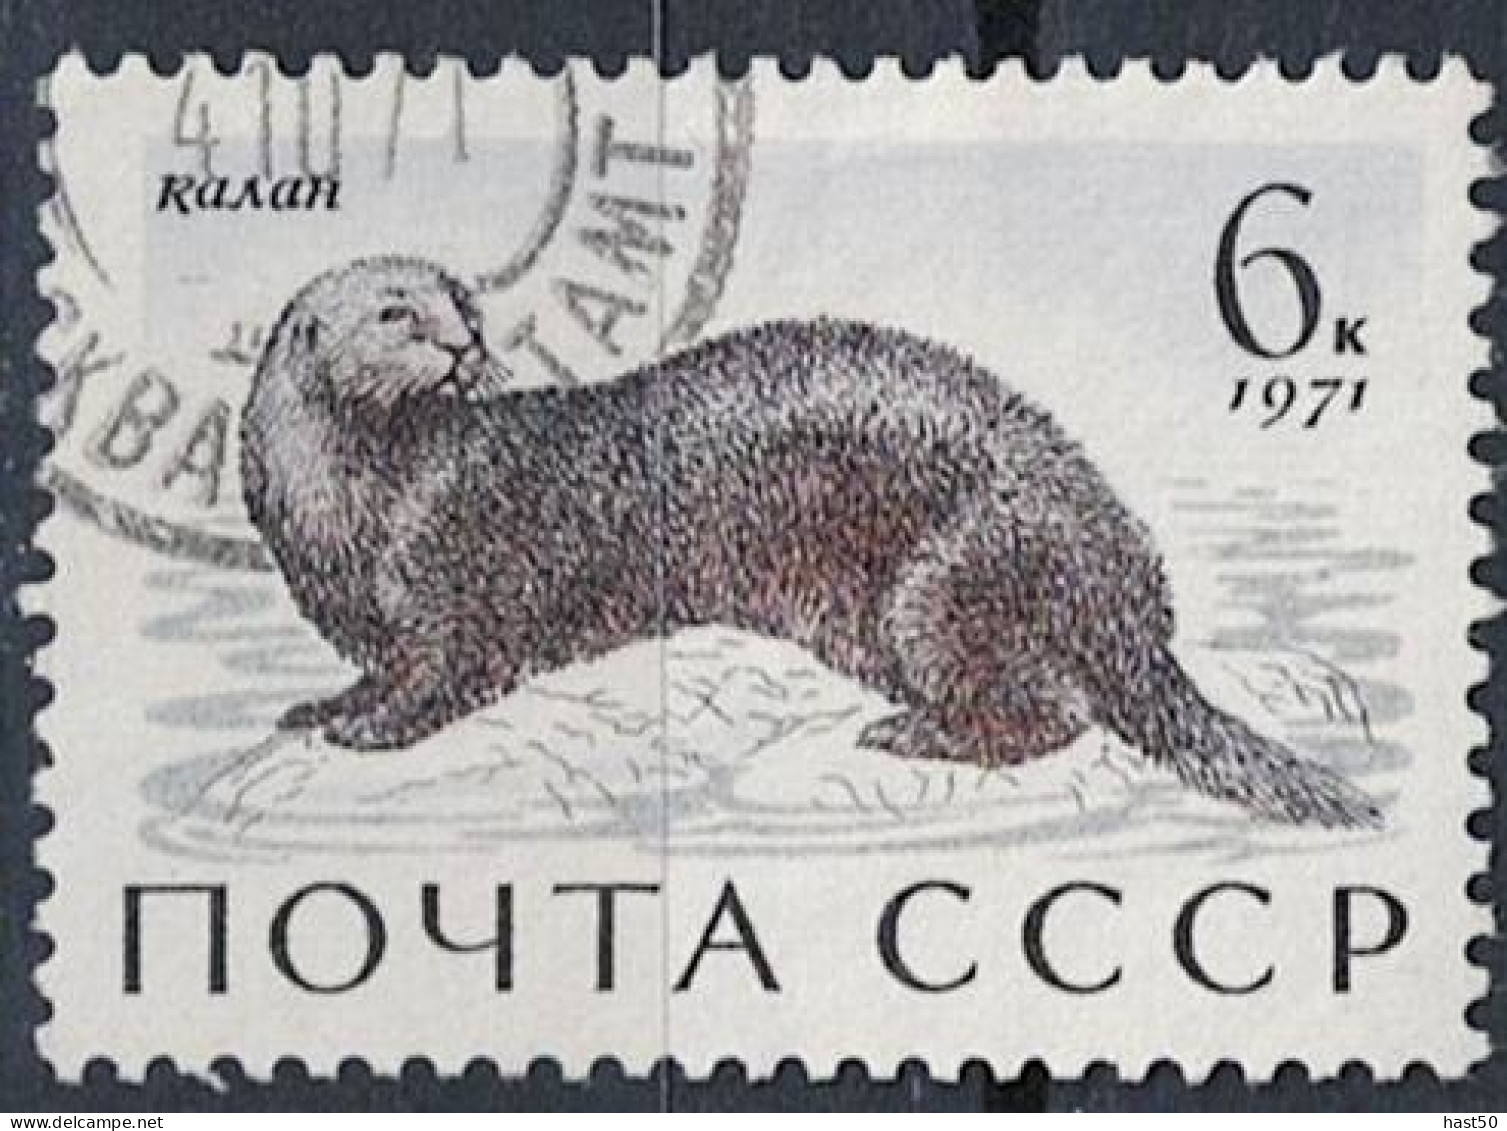 Sowjetunion UdSSR - Seeotter (Enhydra Lutris) (MiNr. 3914) 1971 - Gest Used Obl - Used Stamps